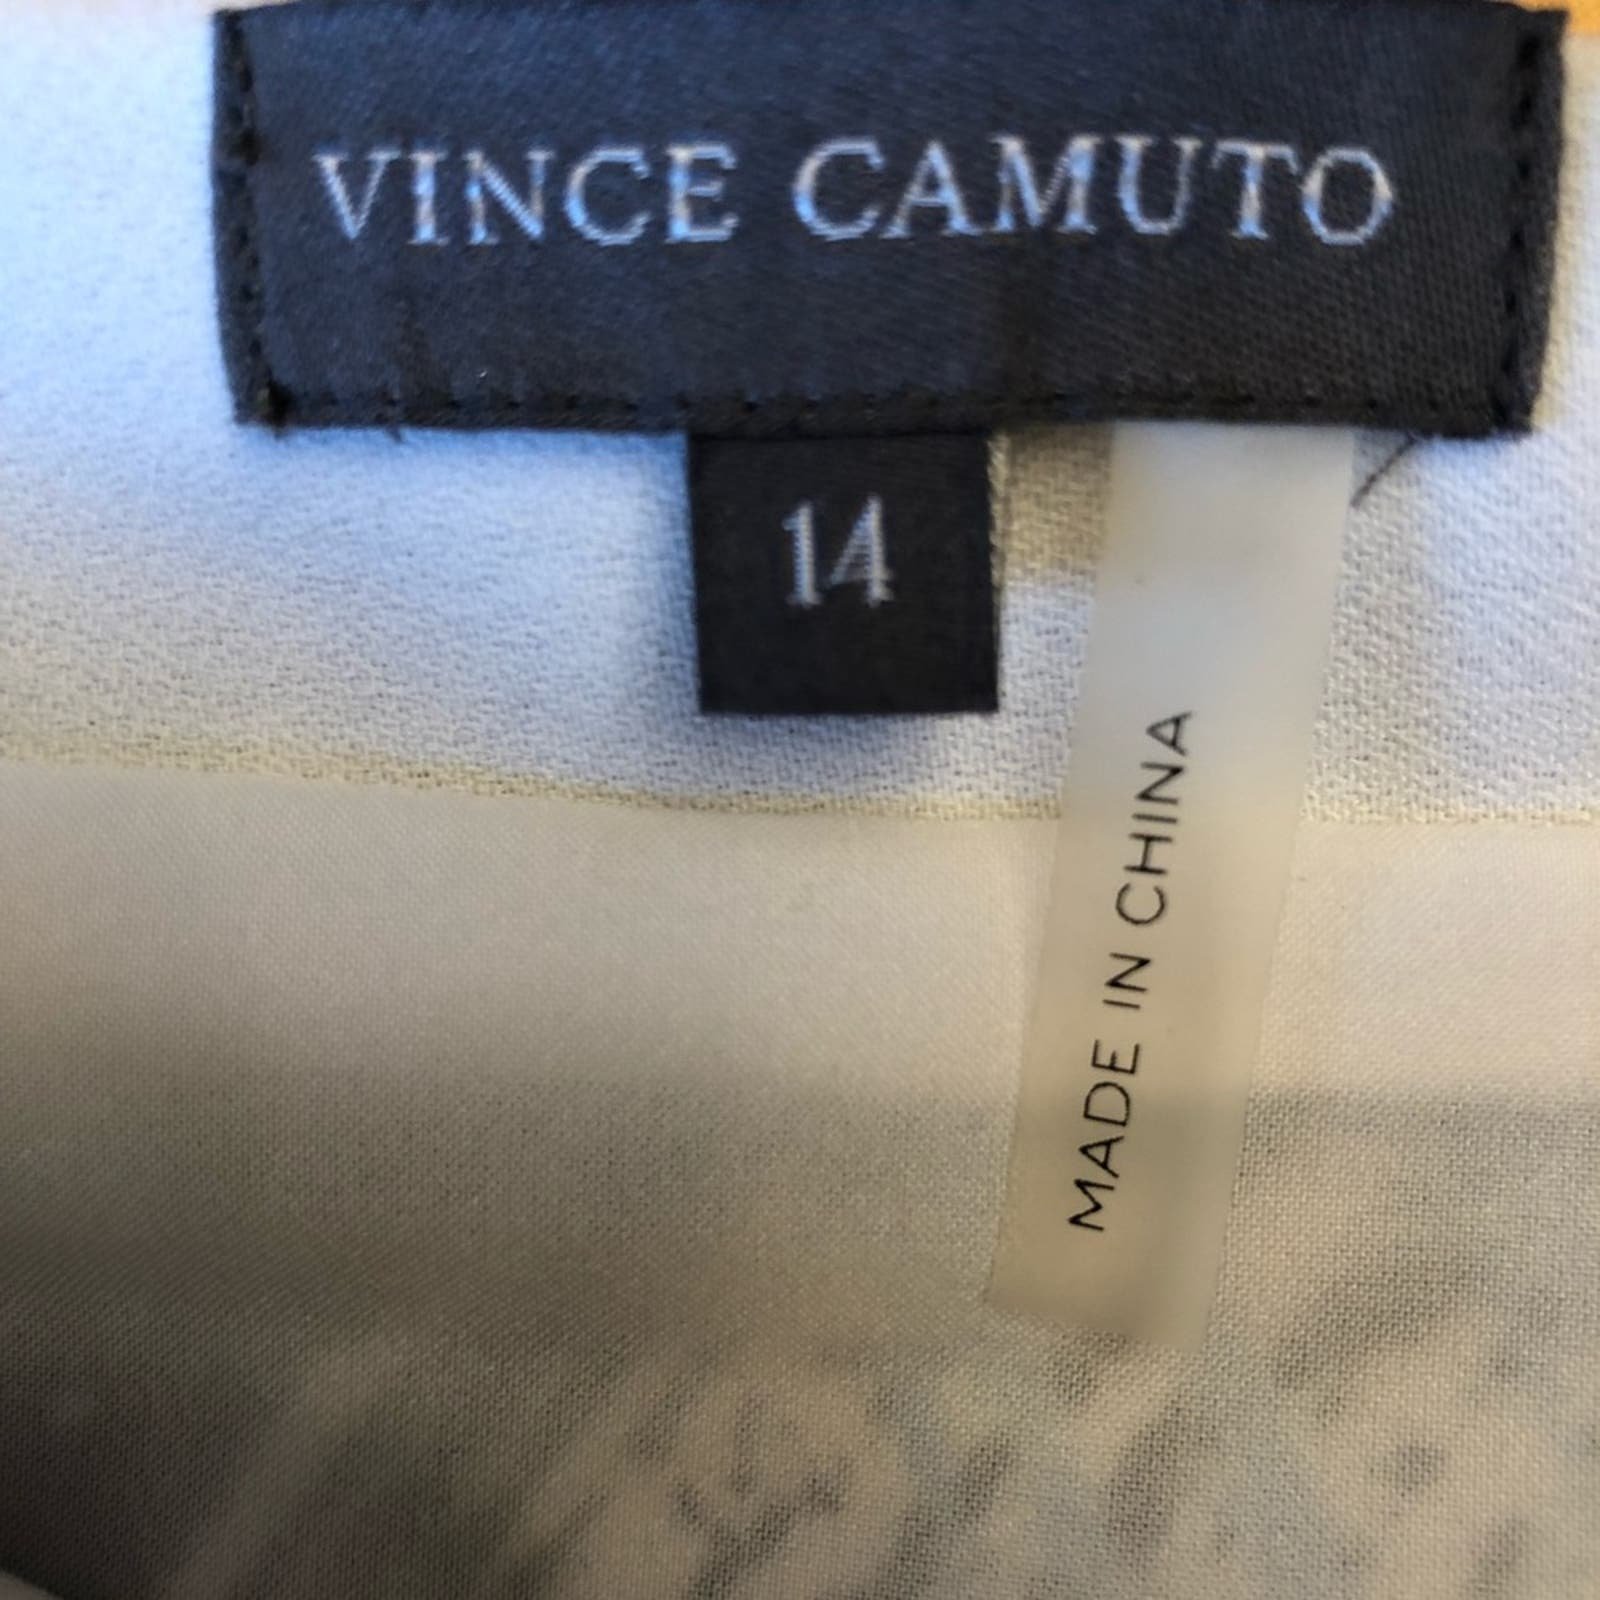 Cheap Vince Camuto skirt with asymmetrical hem. Size 14. kfazDRPxo Great